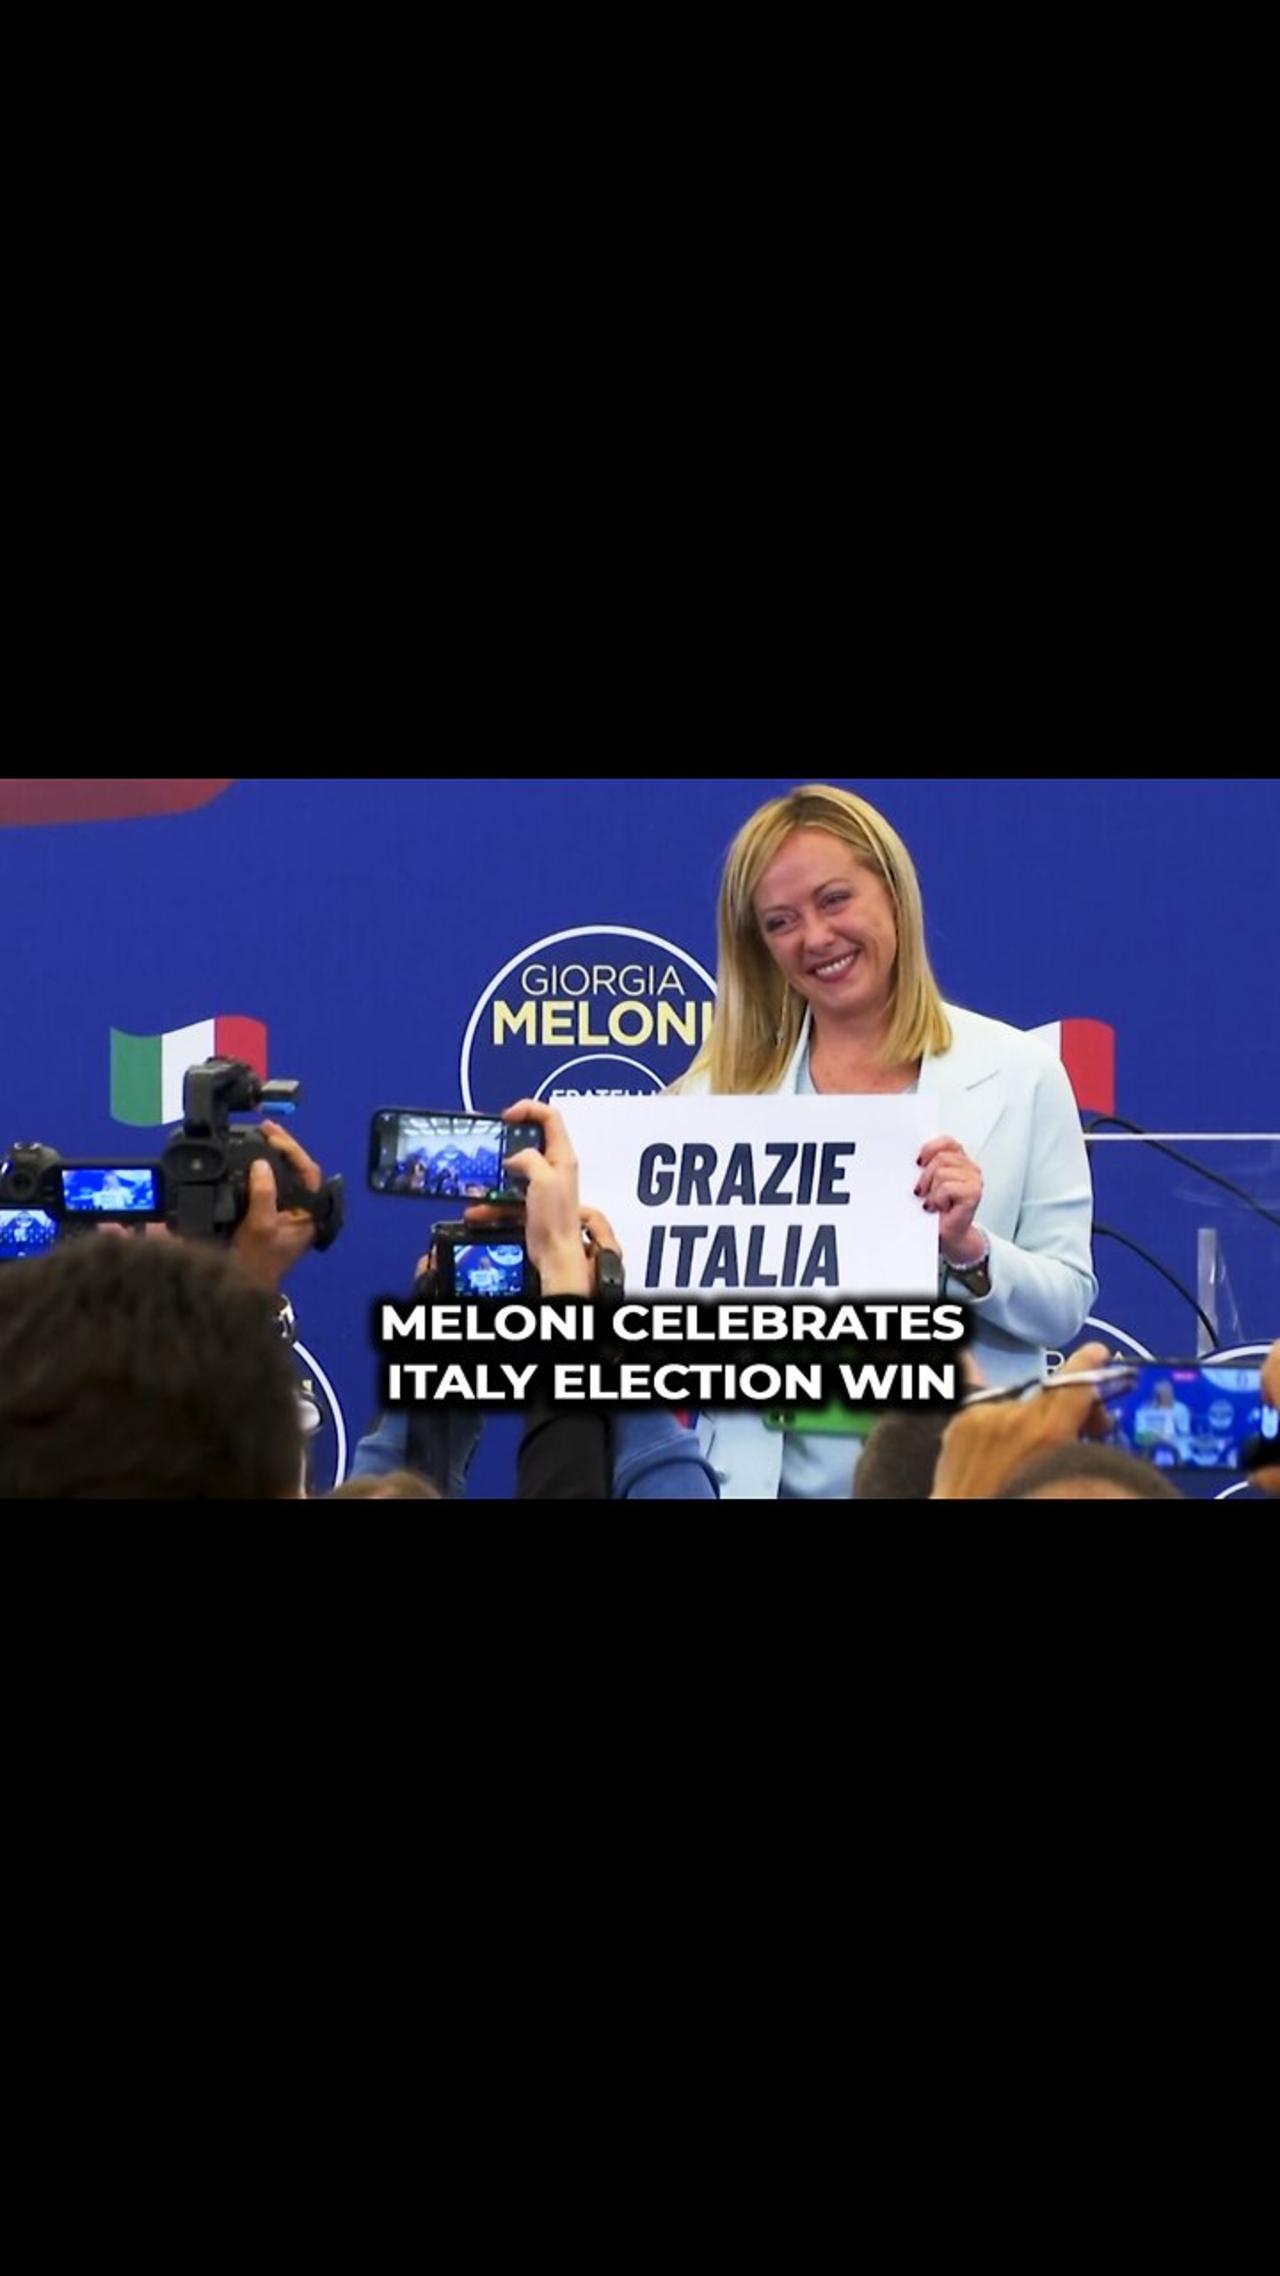 Meloni celebrates Italy election win